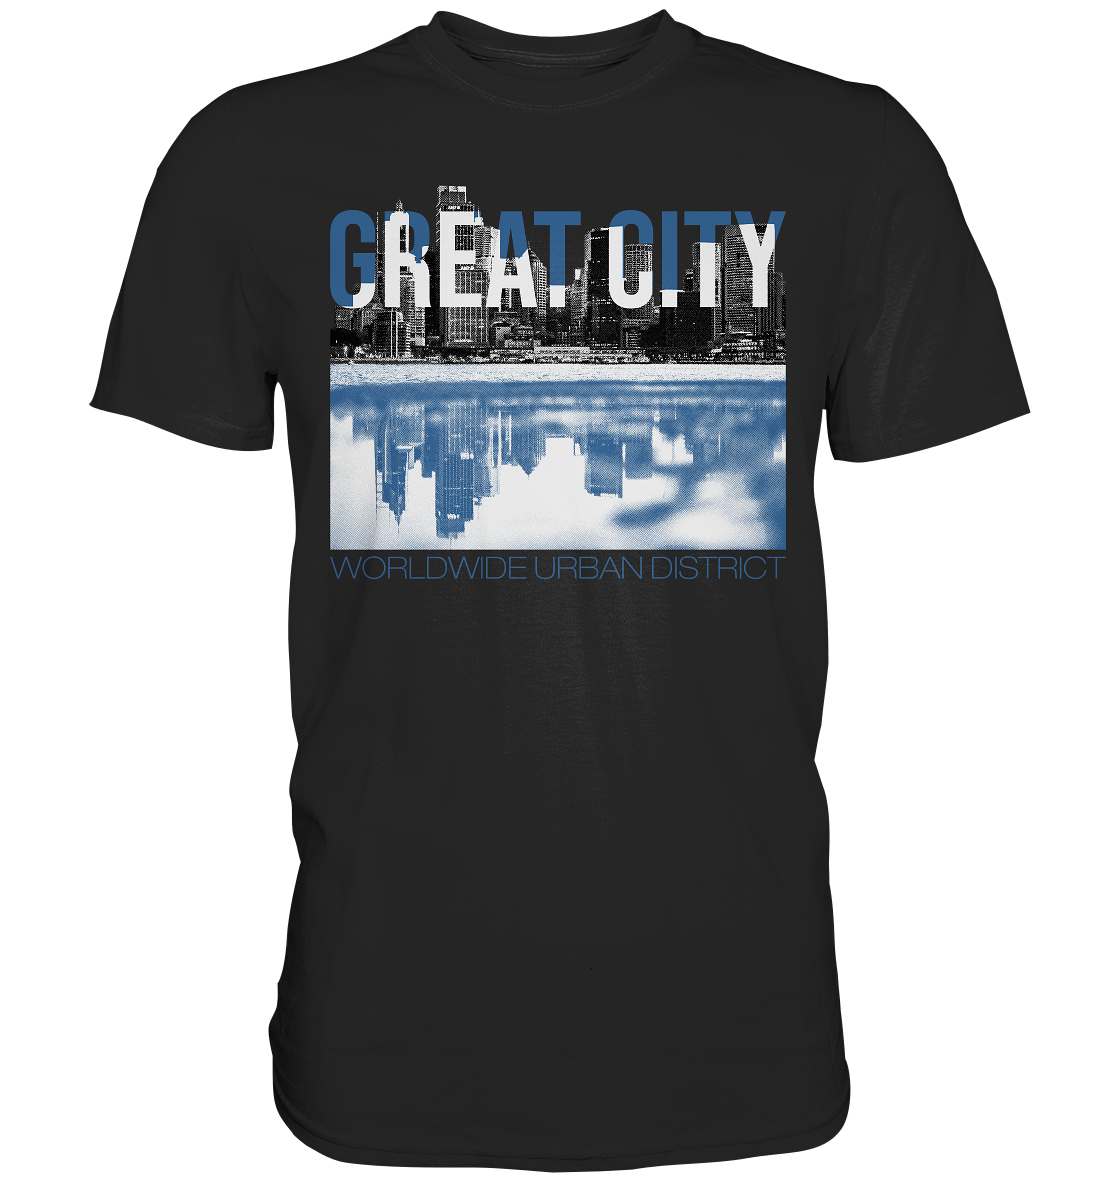 Great City Urban Streetwear - Premium Shirt